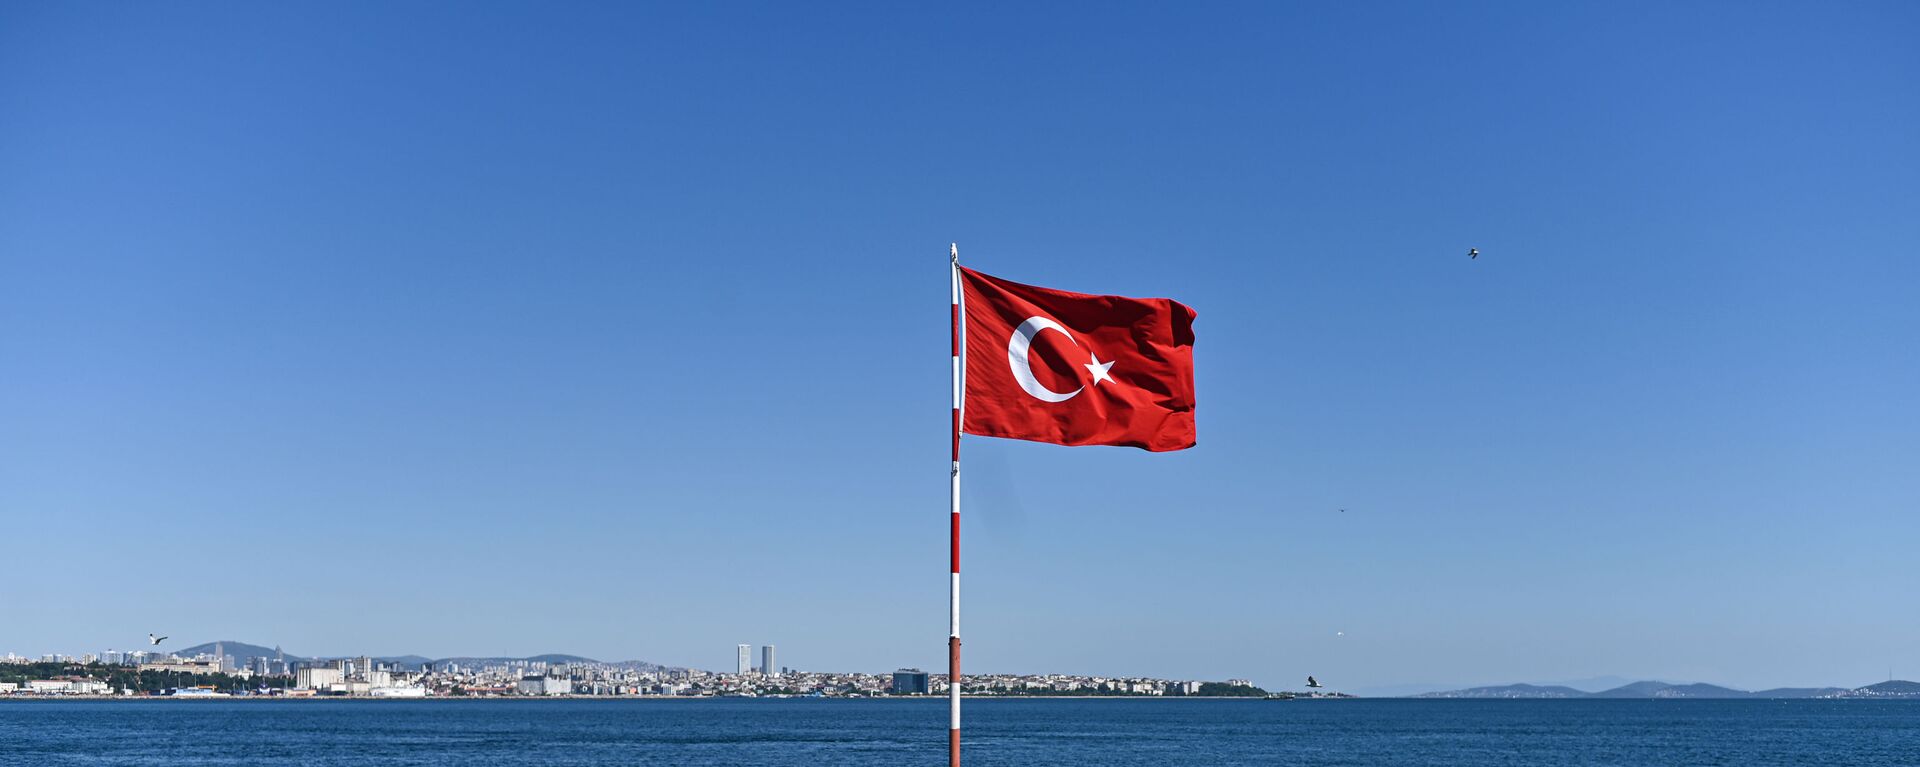 Флаг Турции, фото из архива - Sputnik Azərbaycan, 1920, 05.04.2021